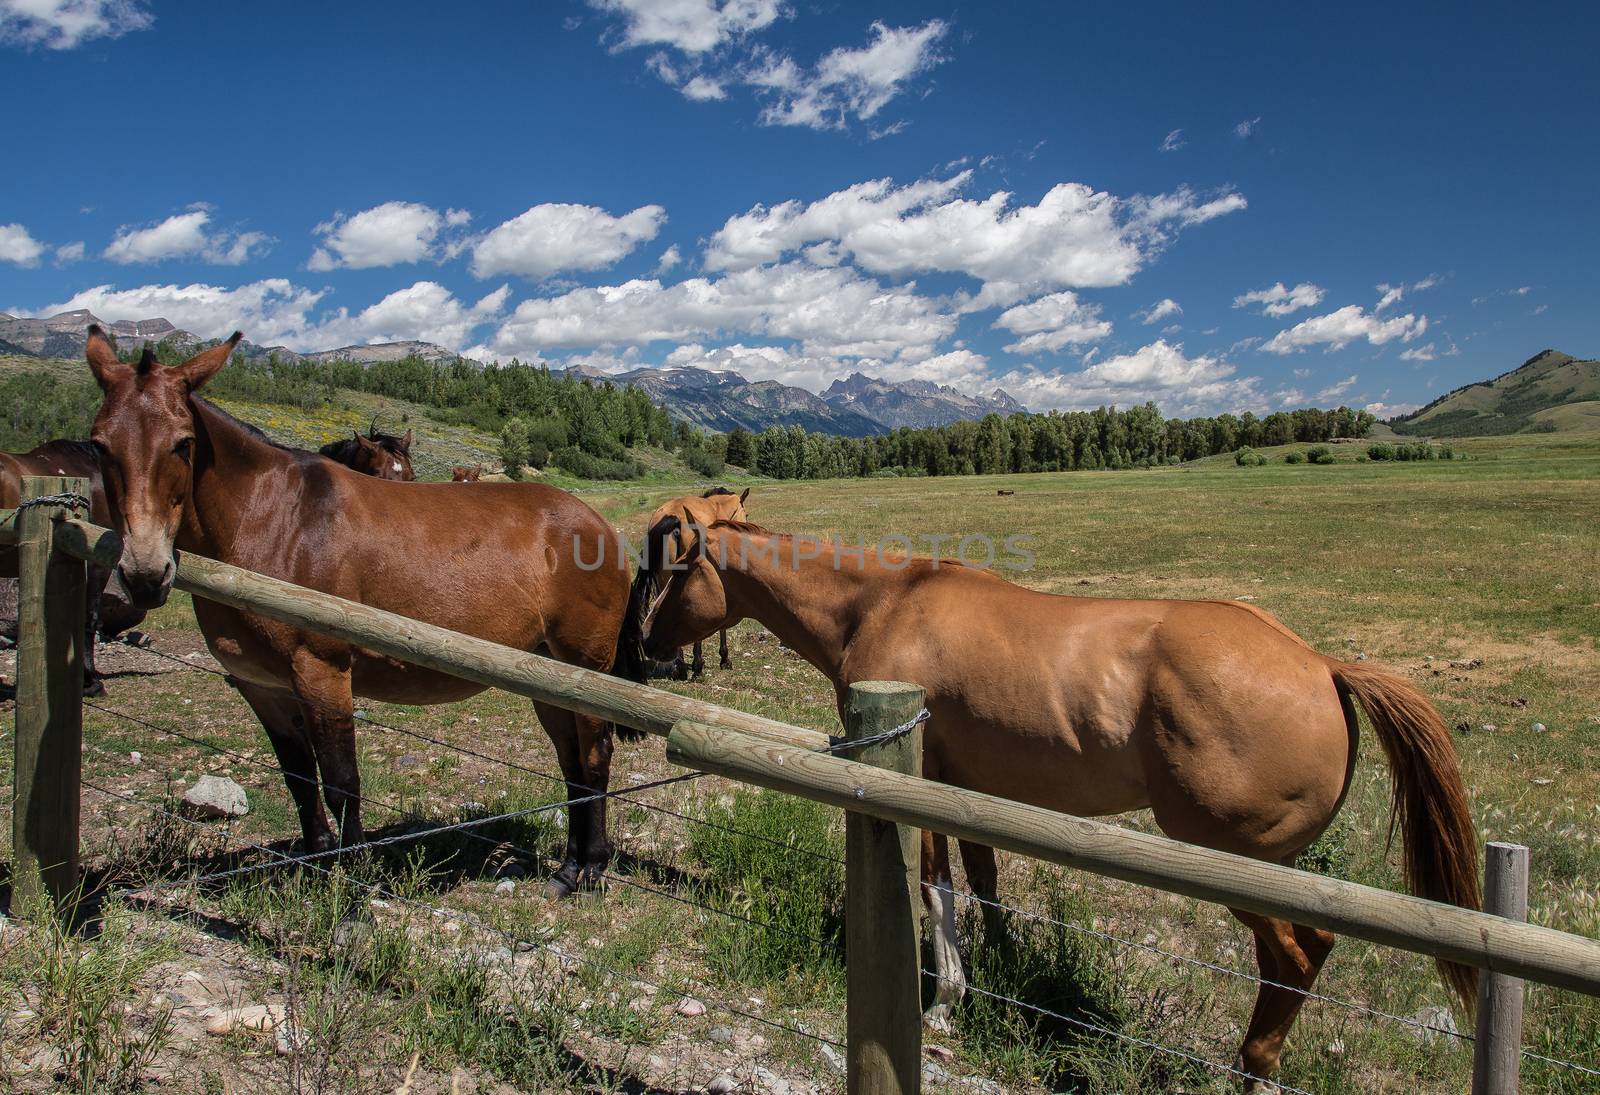 Wyoming Horses by teacherdad48@yahoo.com